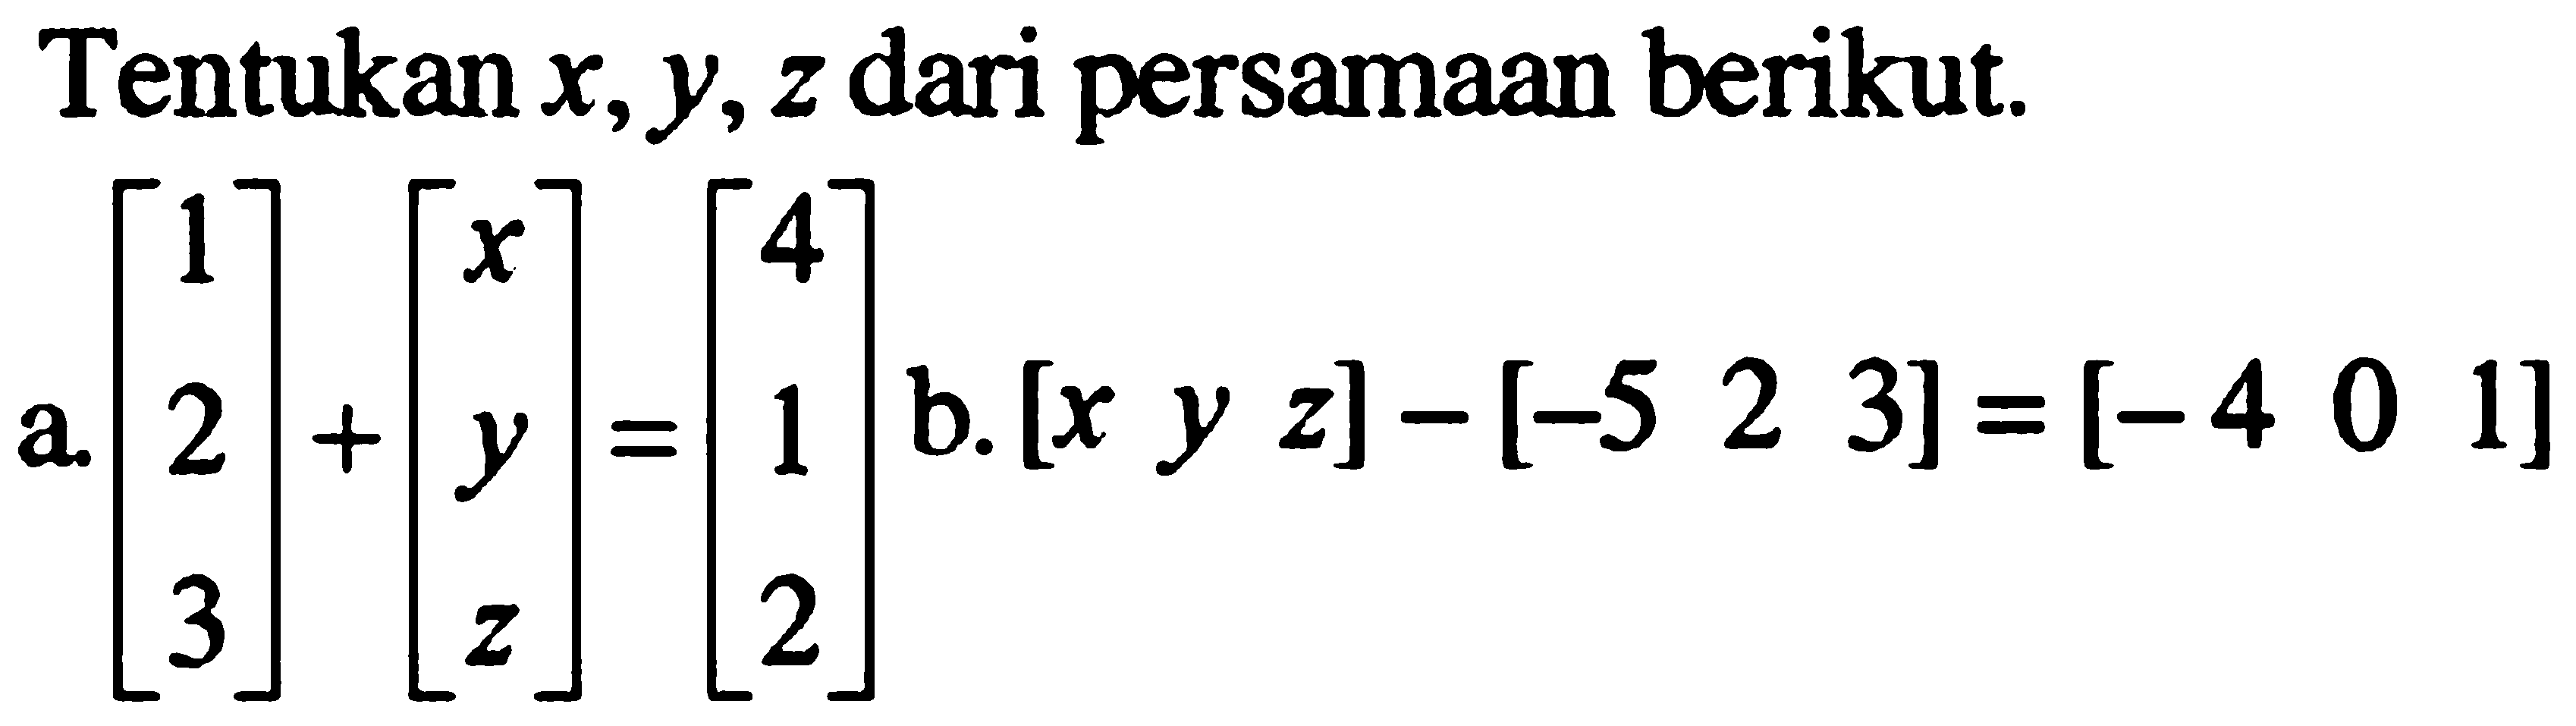 Tentukan x,y,z dari persamaan berikut. a.[1 2 3]+[x y z]=[4 1 2] b. [x y z]-[-5 2 3]=[-4 0 1]